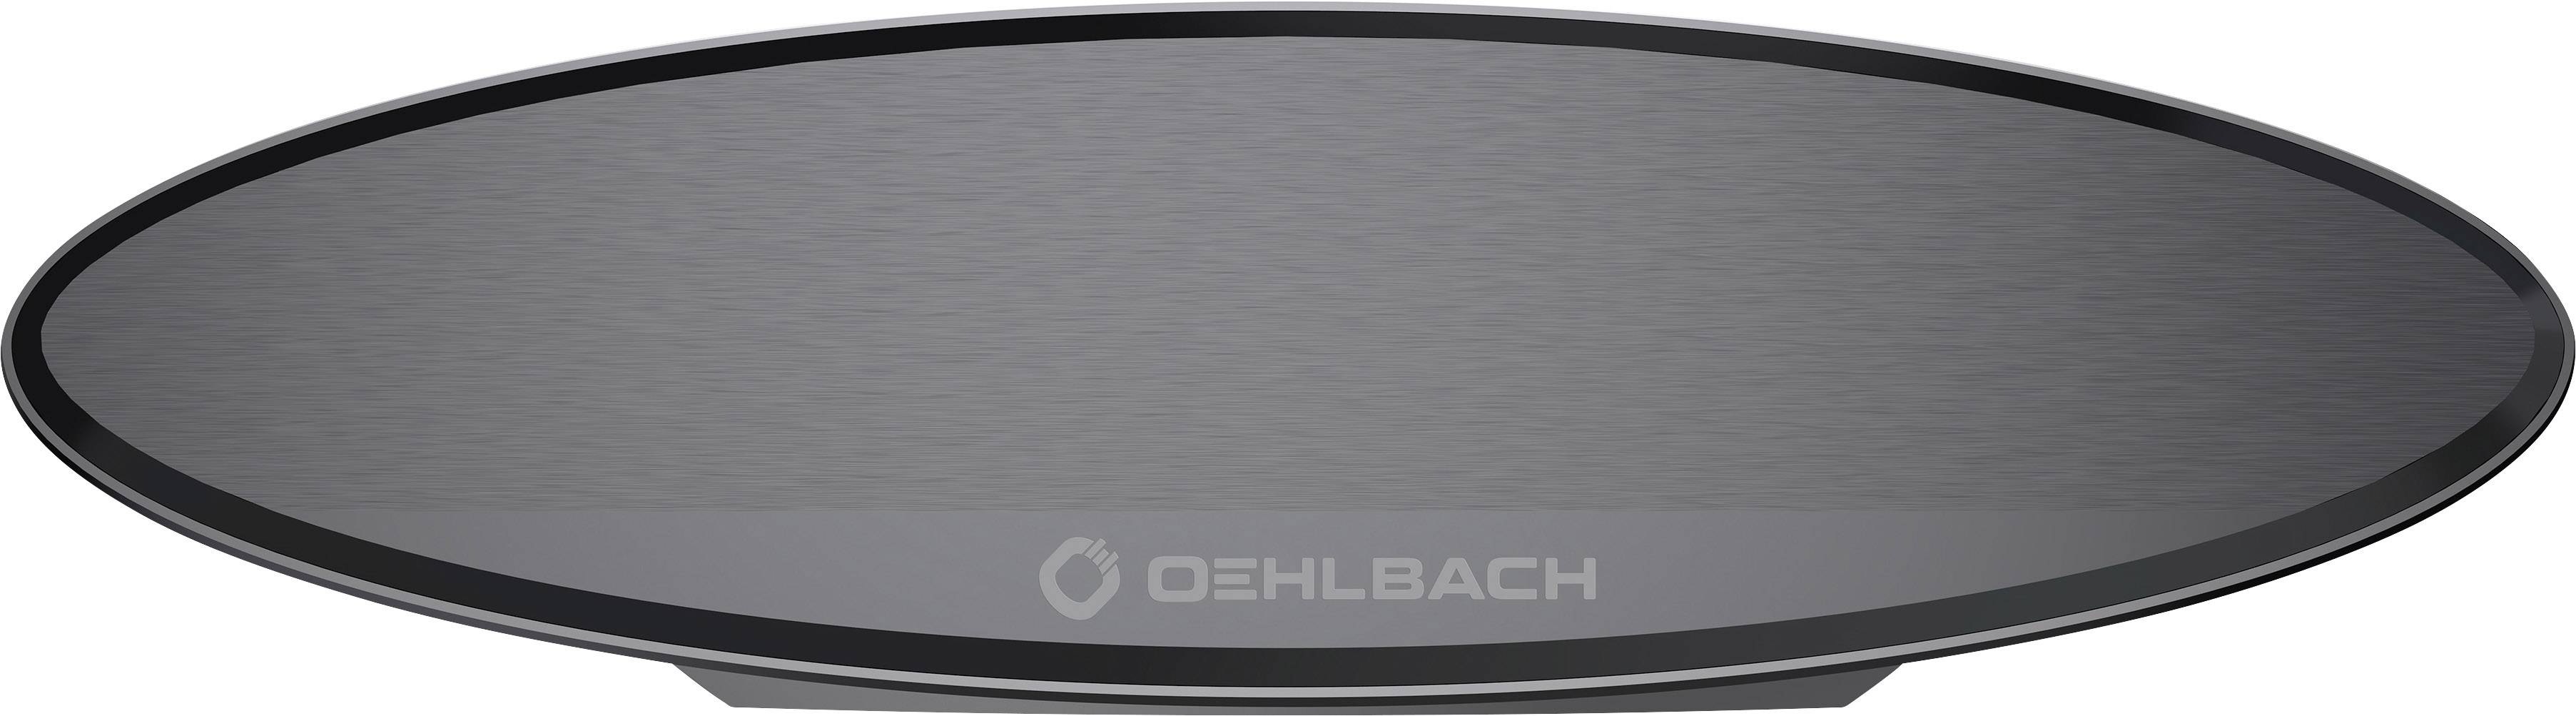 OEHLBACH Scope Oval D1C17229 Aktive DVB-T/T2 Flachantenne Innenbereich Schwarz